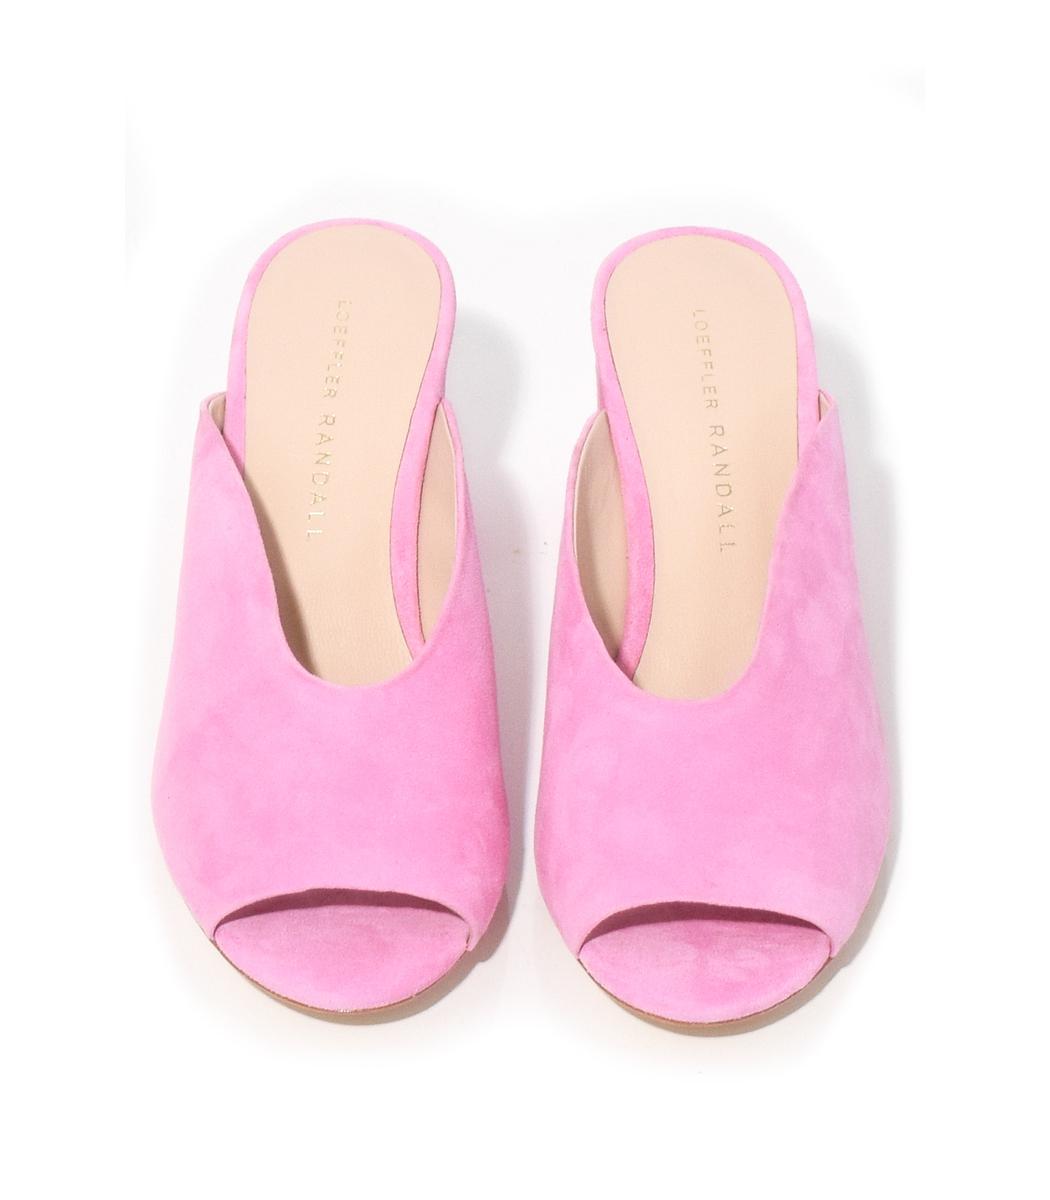 Loeffler Randall Leather Peony Corinne Sandal in Pink - Lyst